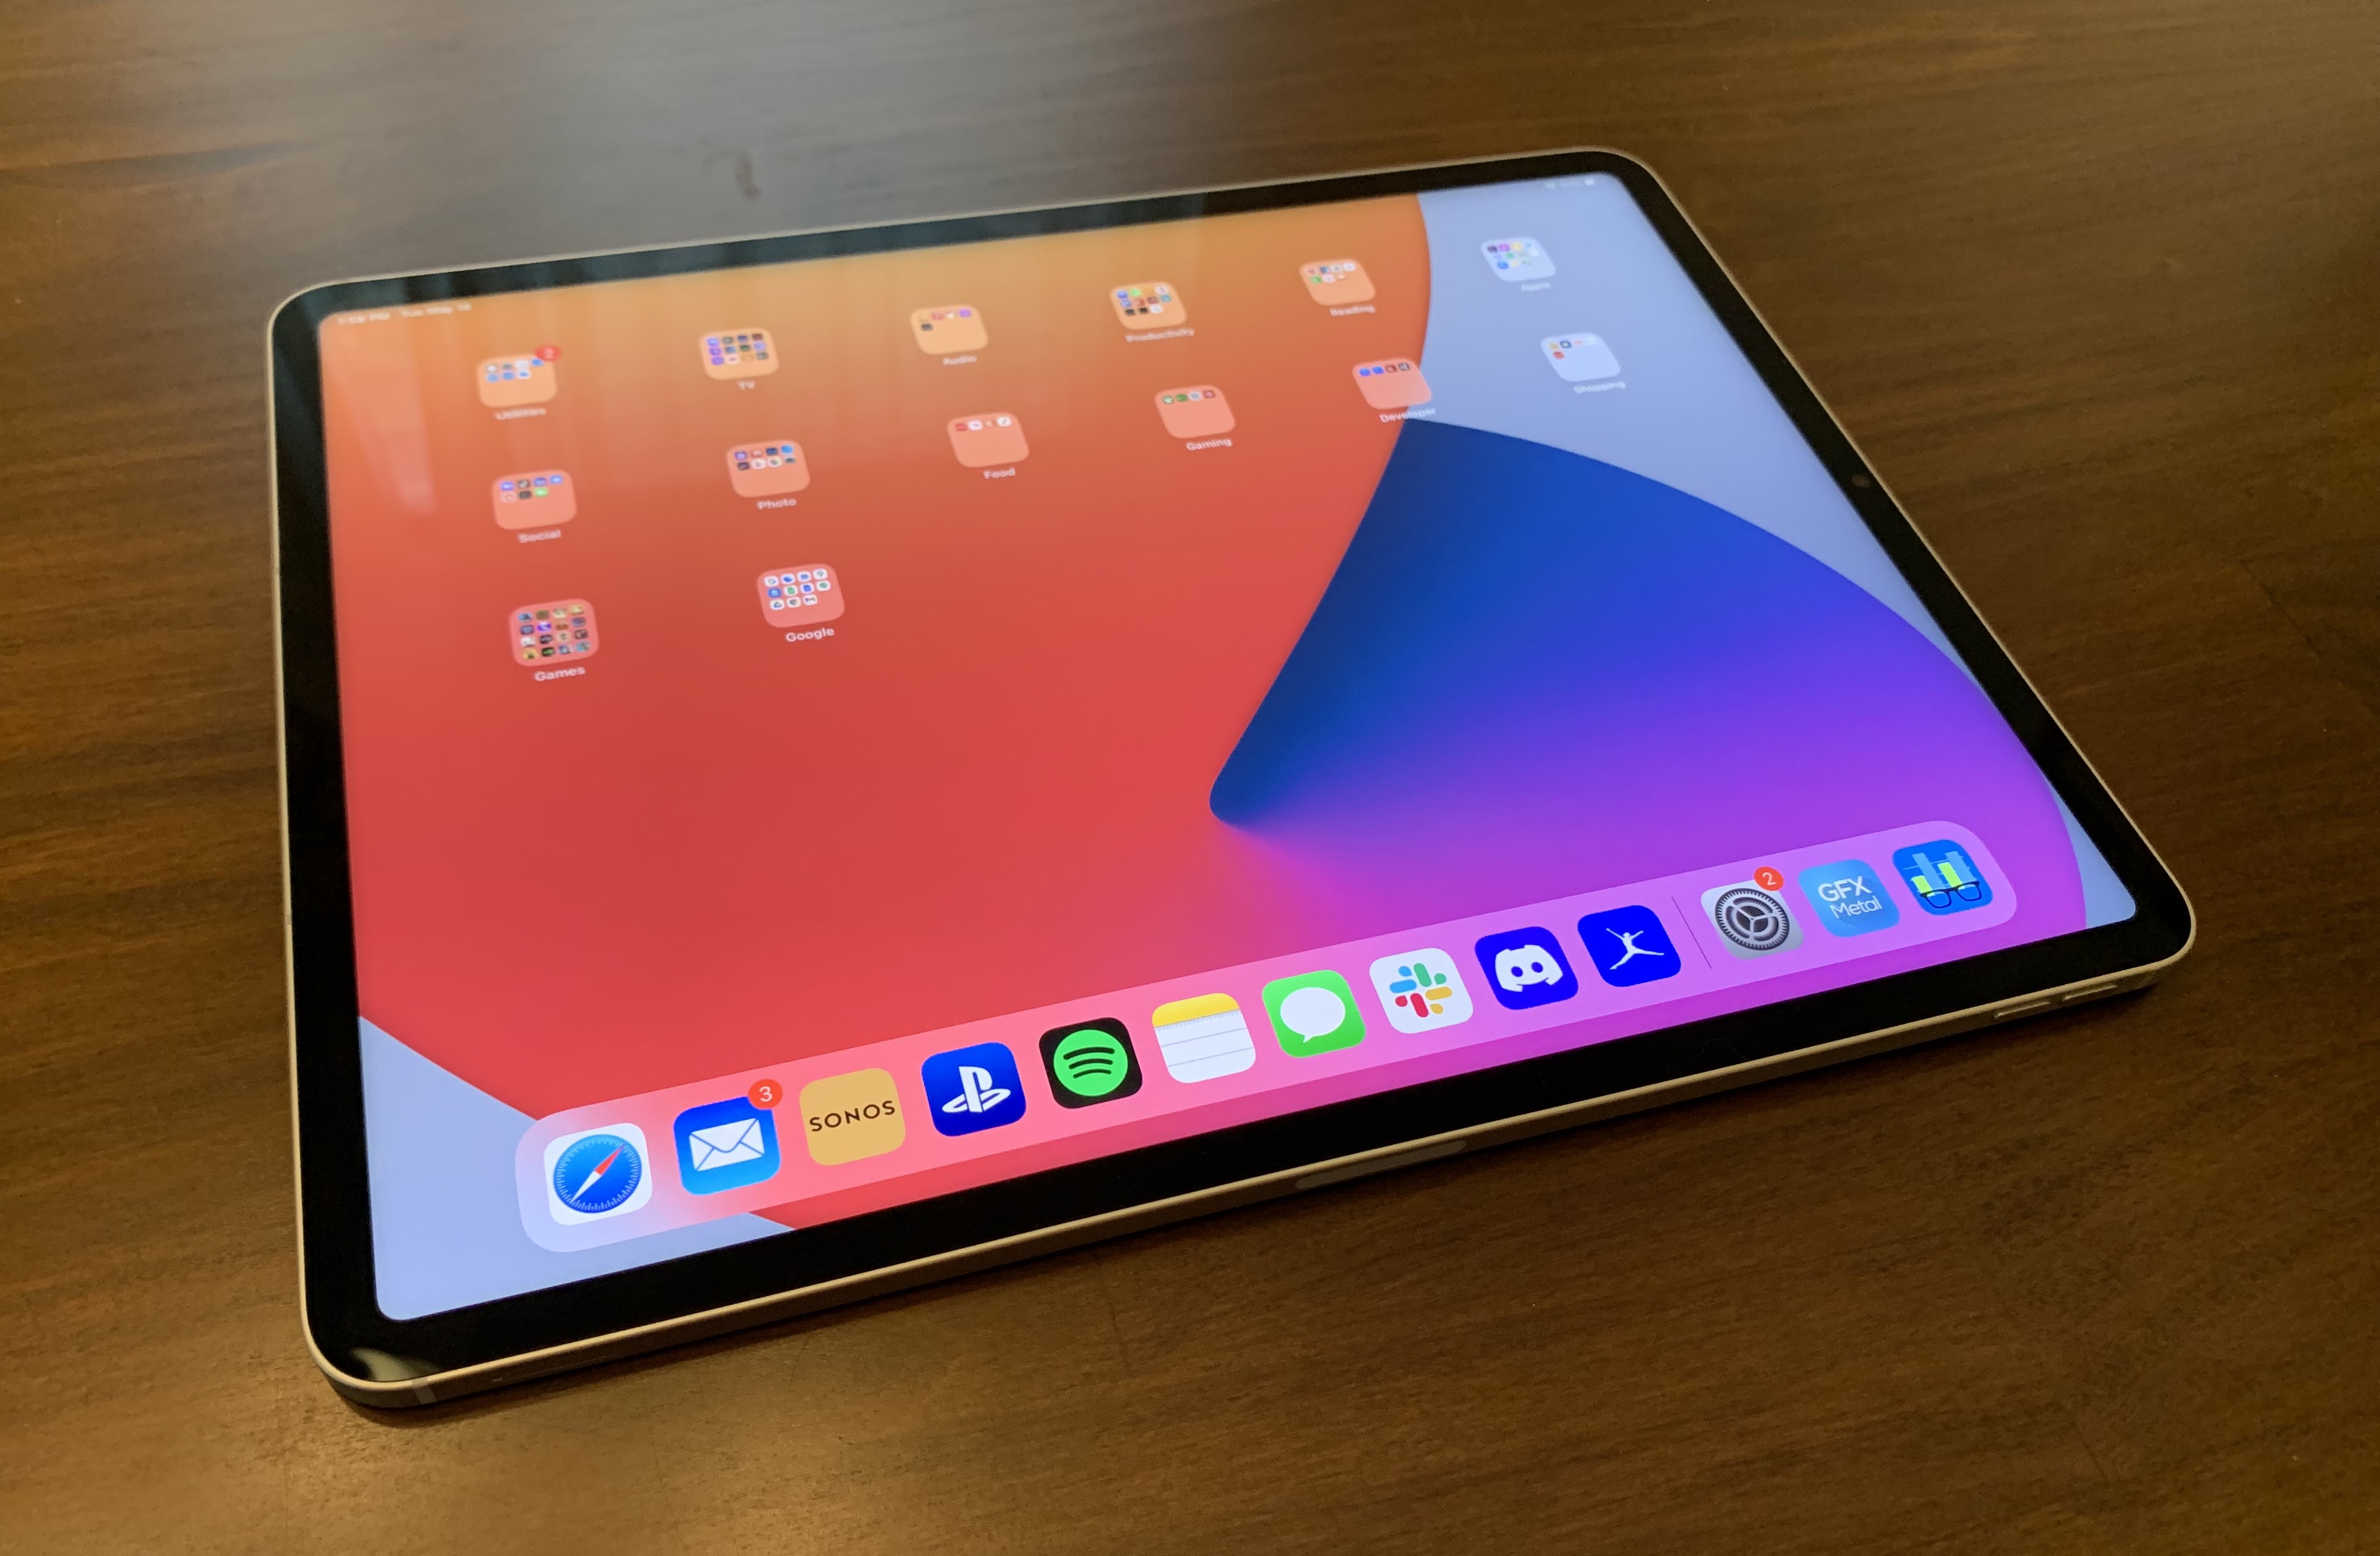 Apple iPad Pro 12.9-inch Review: New iPad for Students & Creators